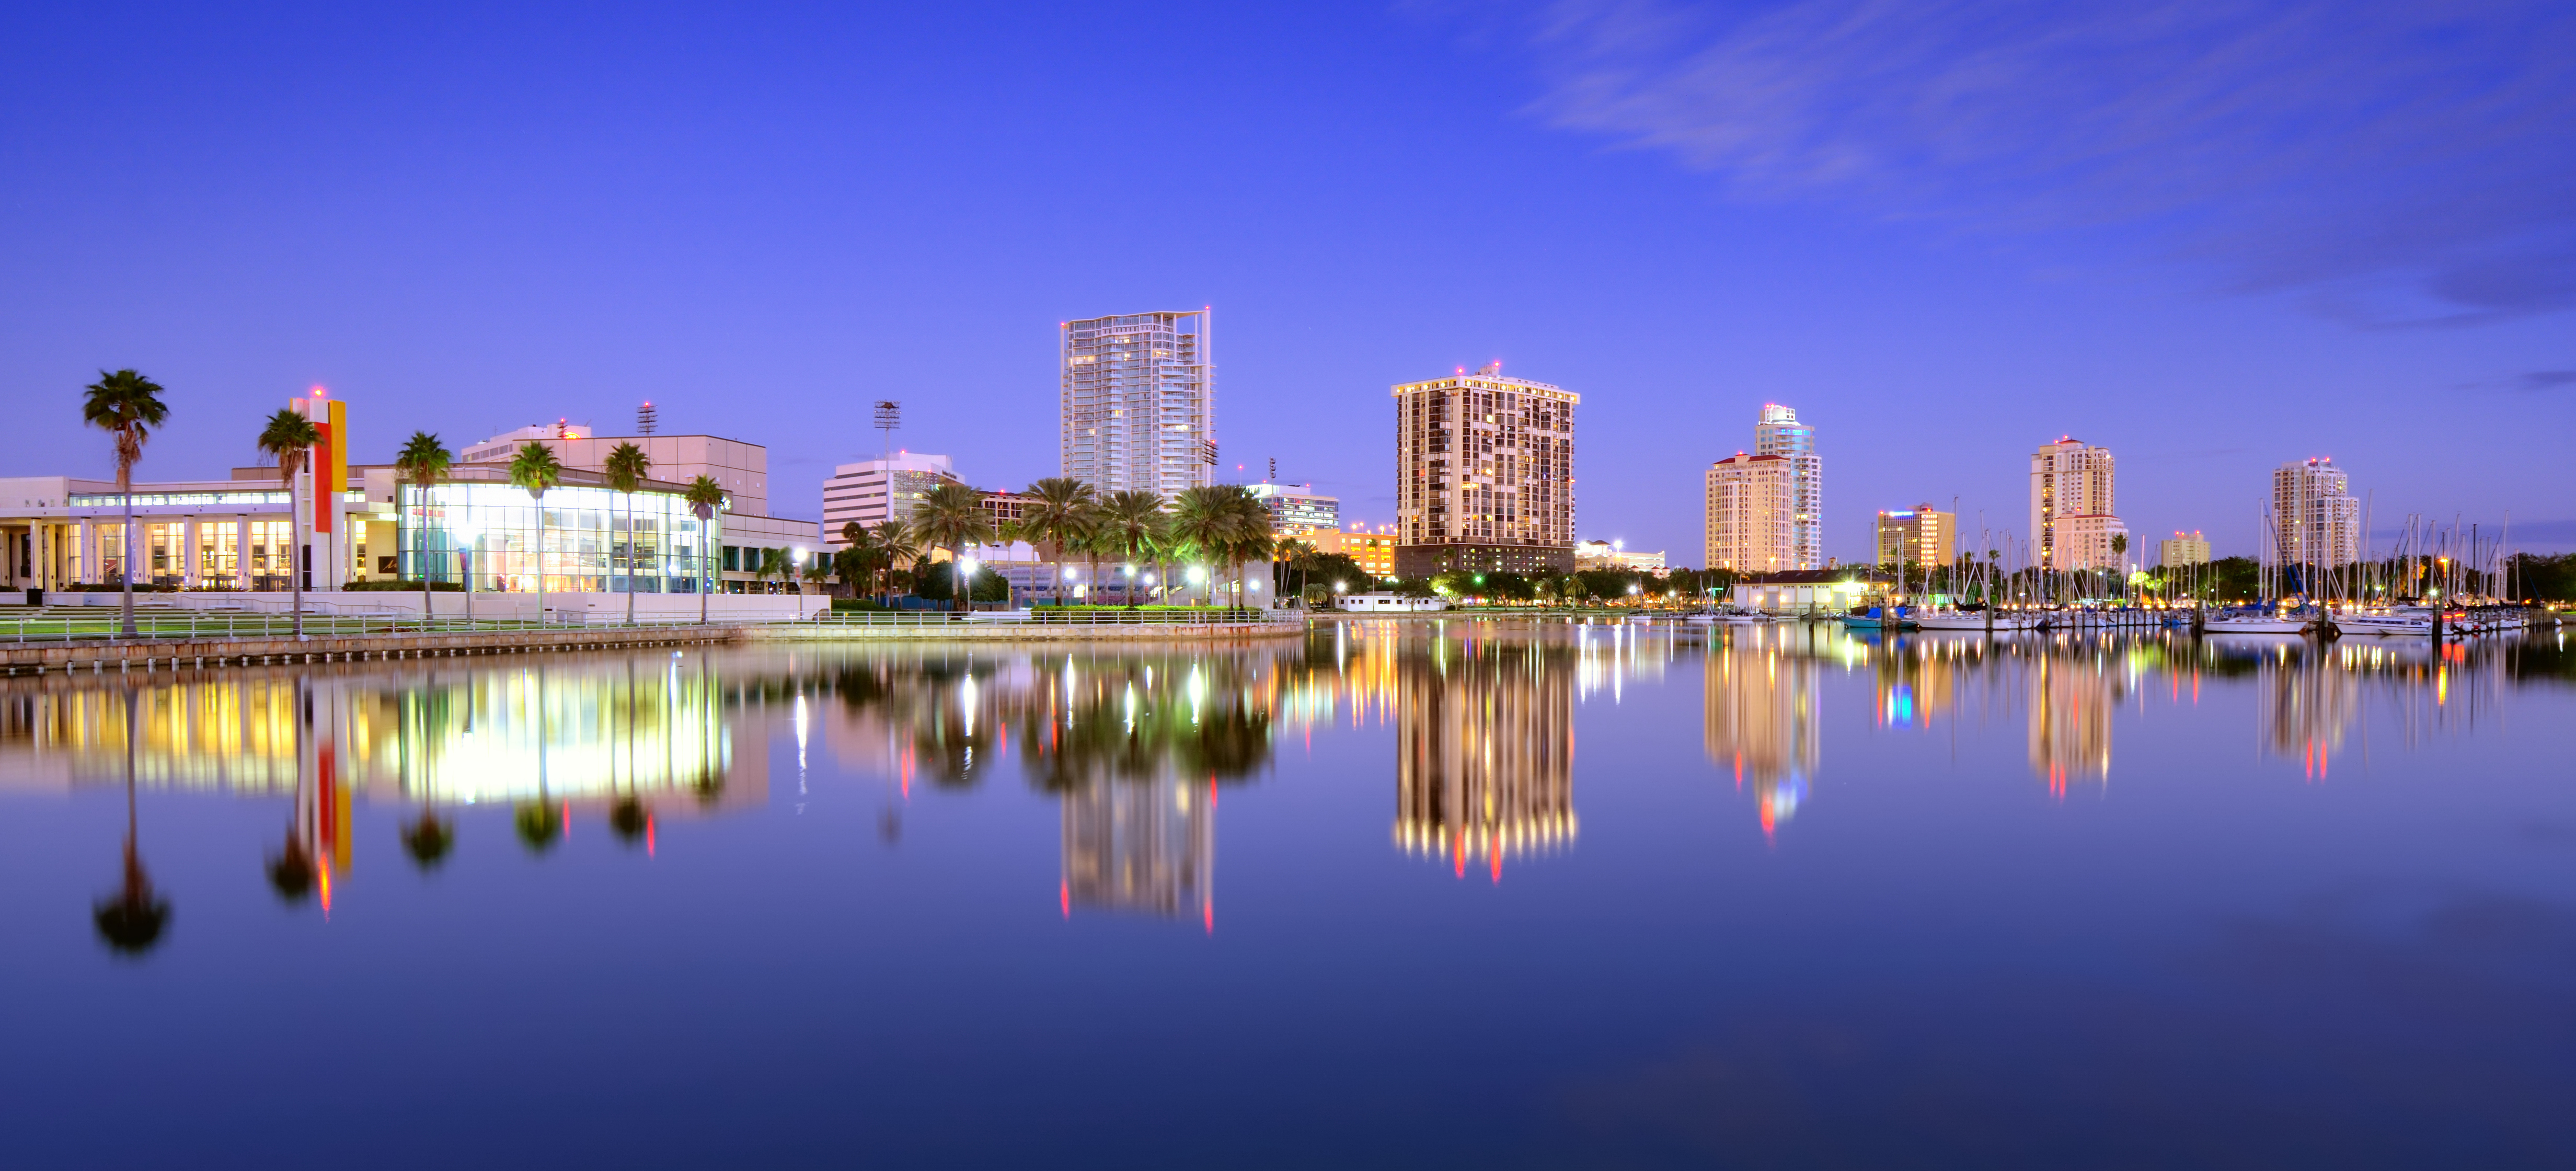 An evening skyline of downtown St. Petersburg, Florida.